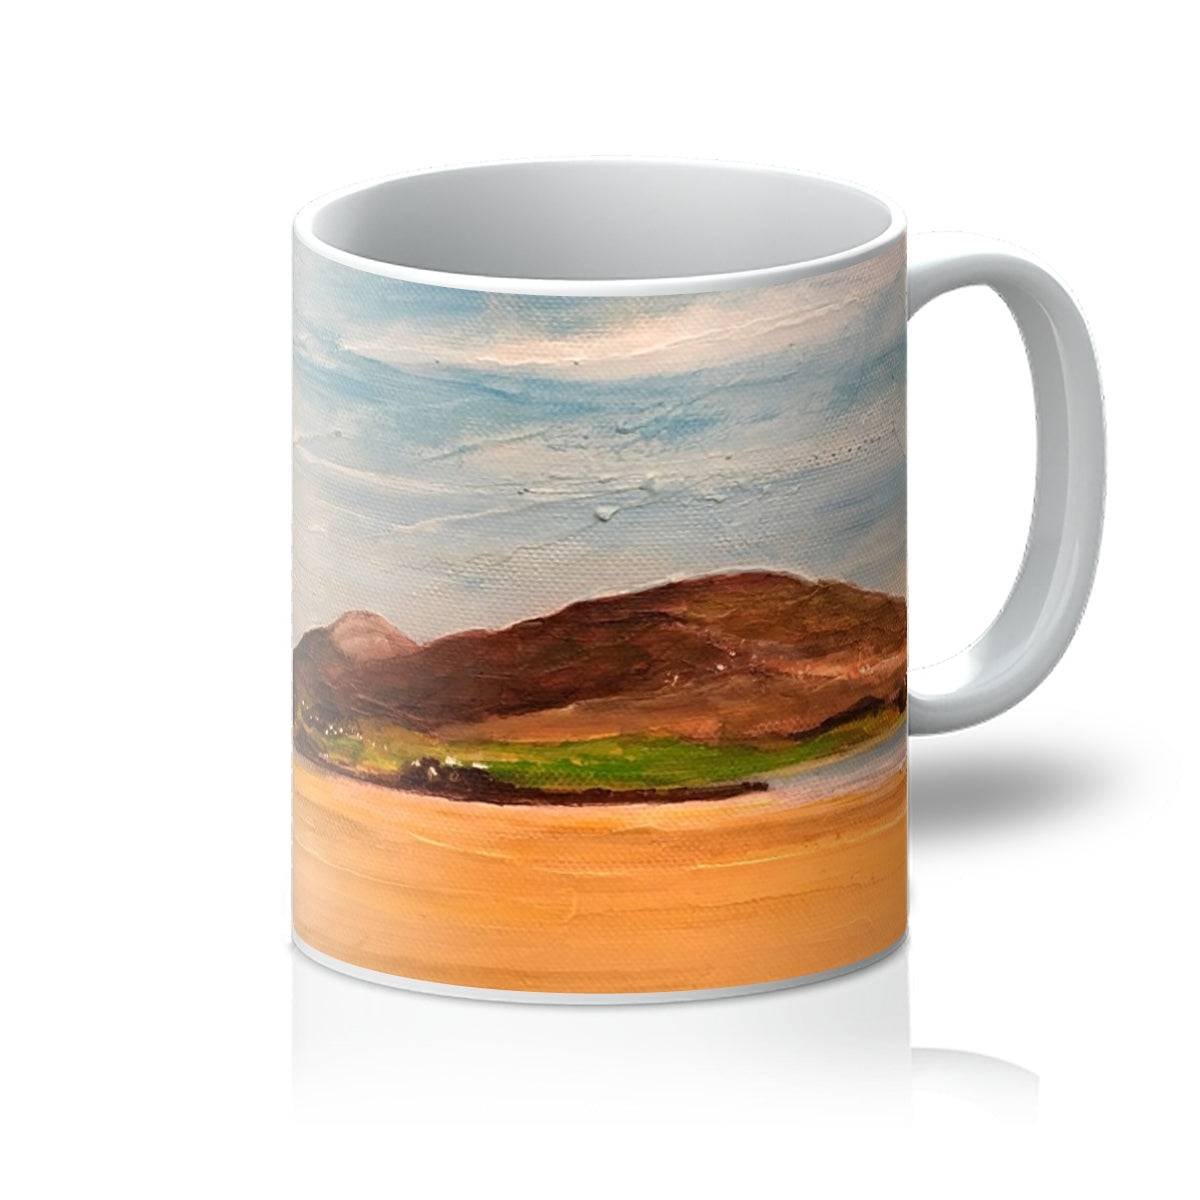 Uig Sands Lewis Art Gifts Mug-Mugs-Hebridean Islands Art Gallery-11oz-White-Paintings, Prints, Homeware, Art Gifts From Scotland By Scottish Artist Kevin Hunter